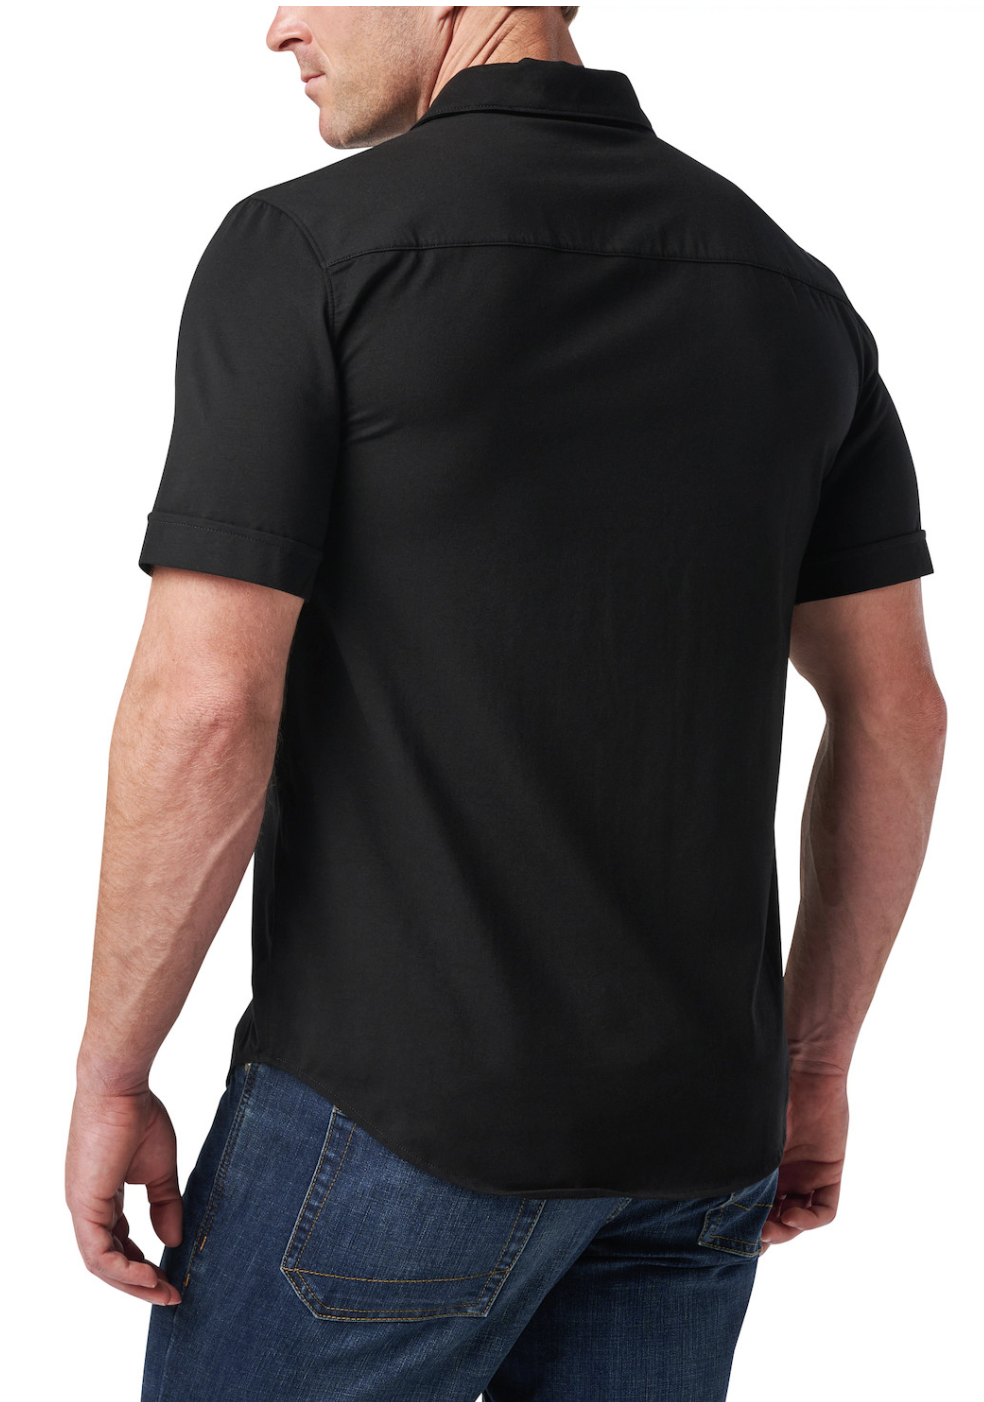 5.11 - Jimmy Knit Shirt - Black (019)